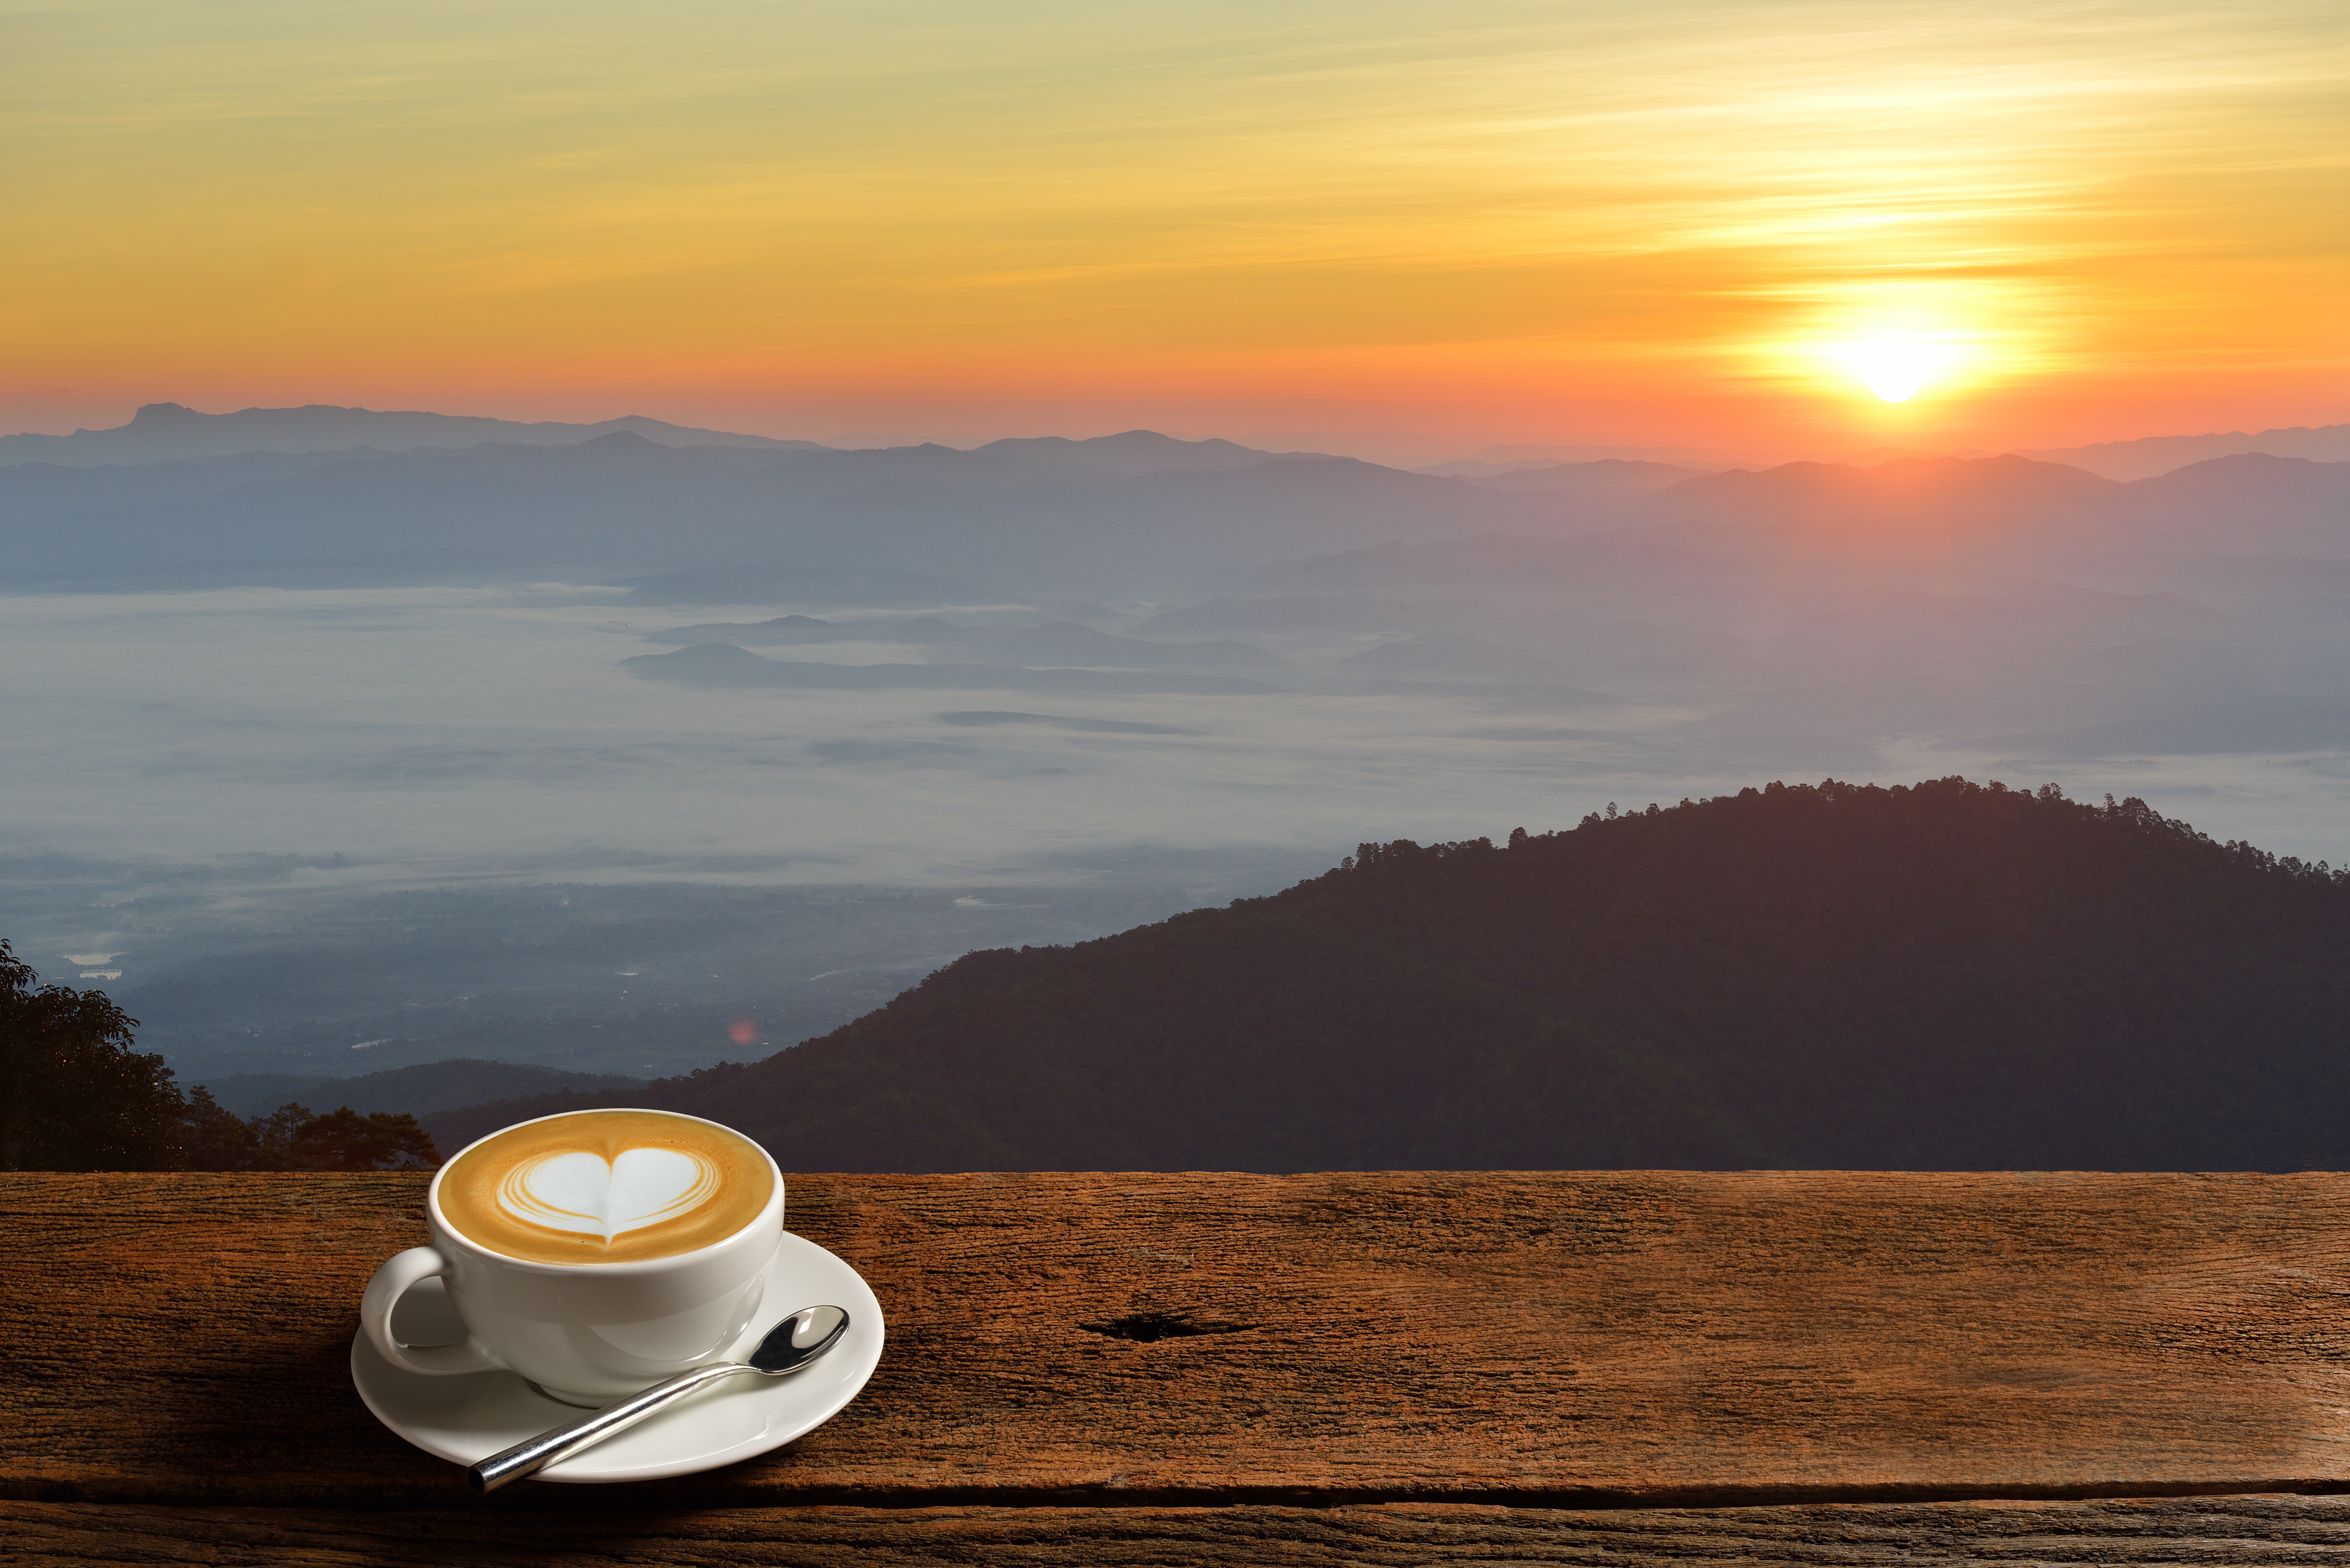 dawn, coffee, morning, Cup, hot, coffee cup, good morning